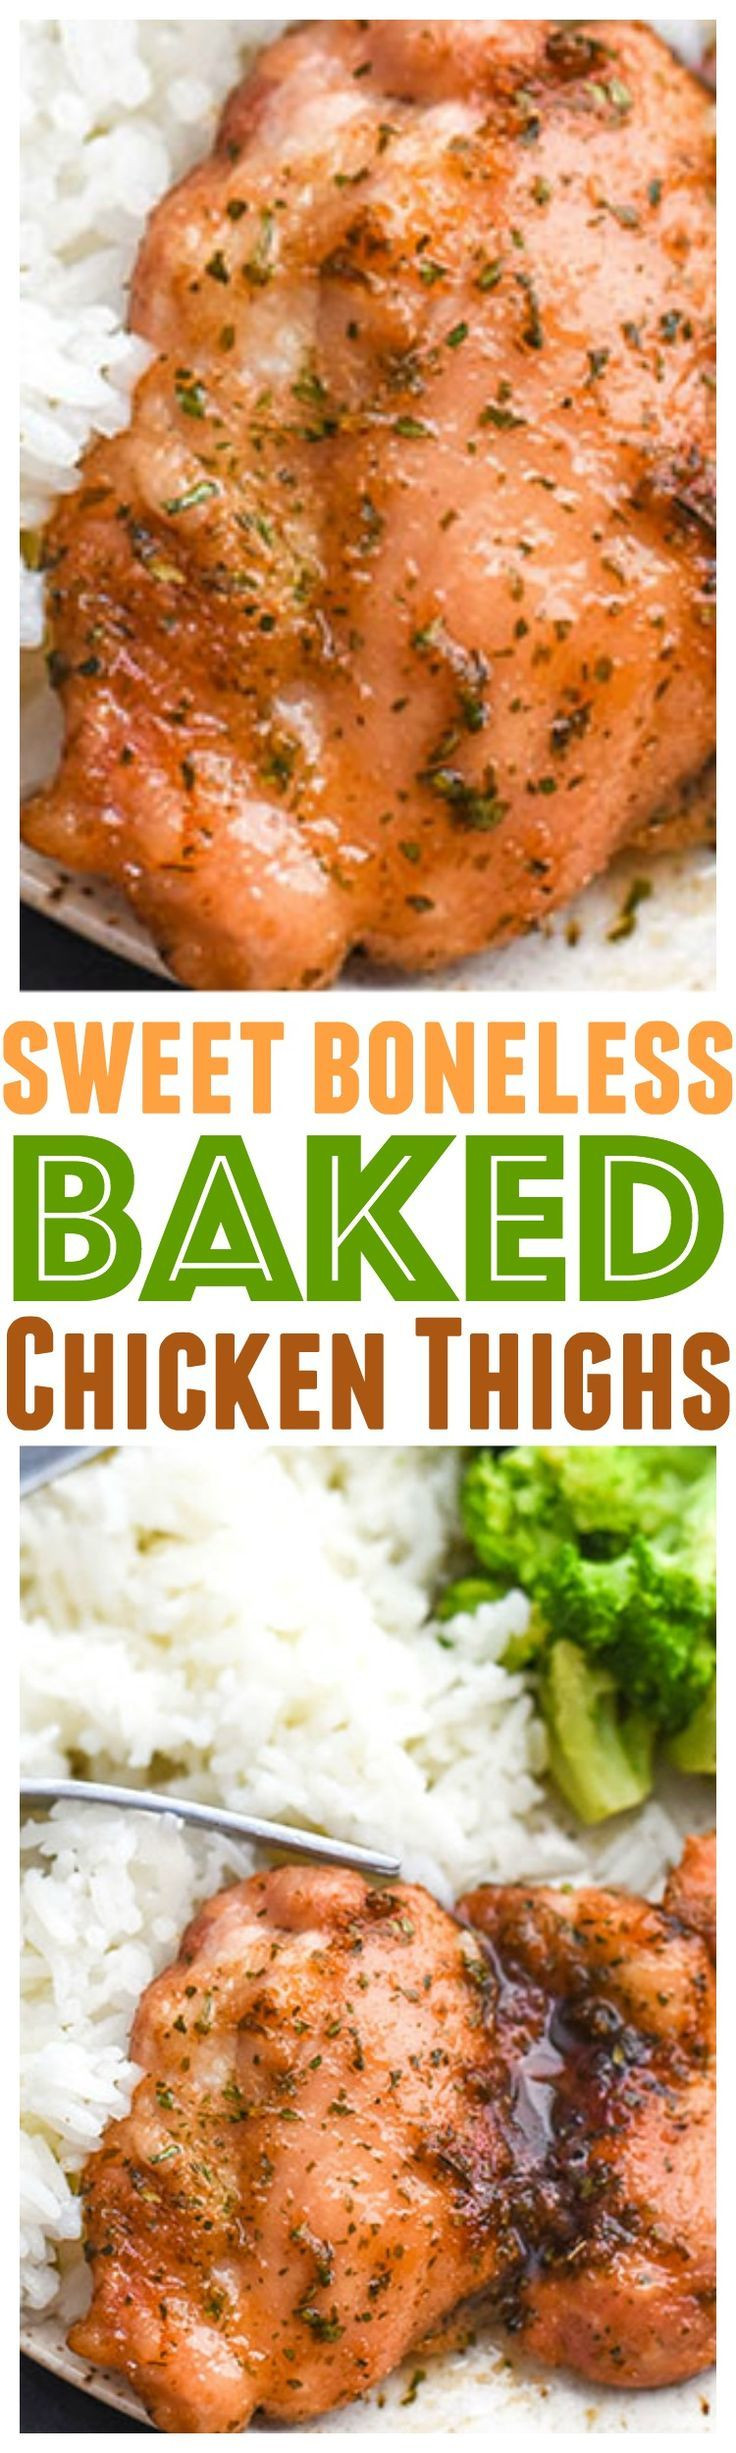 Roasted Boneless Chicken Thighs
 The 25 best Baked boneless chicken recipes ideas on